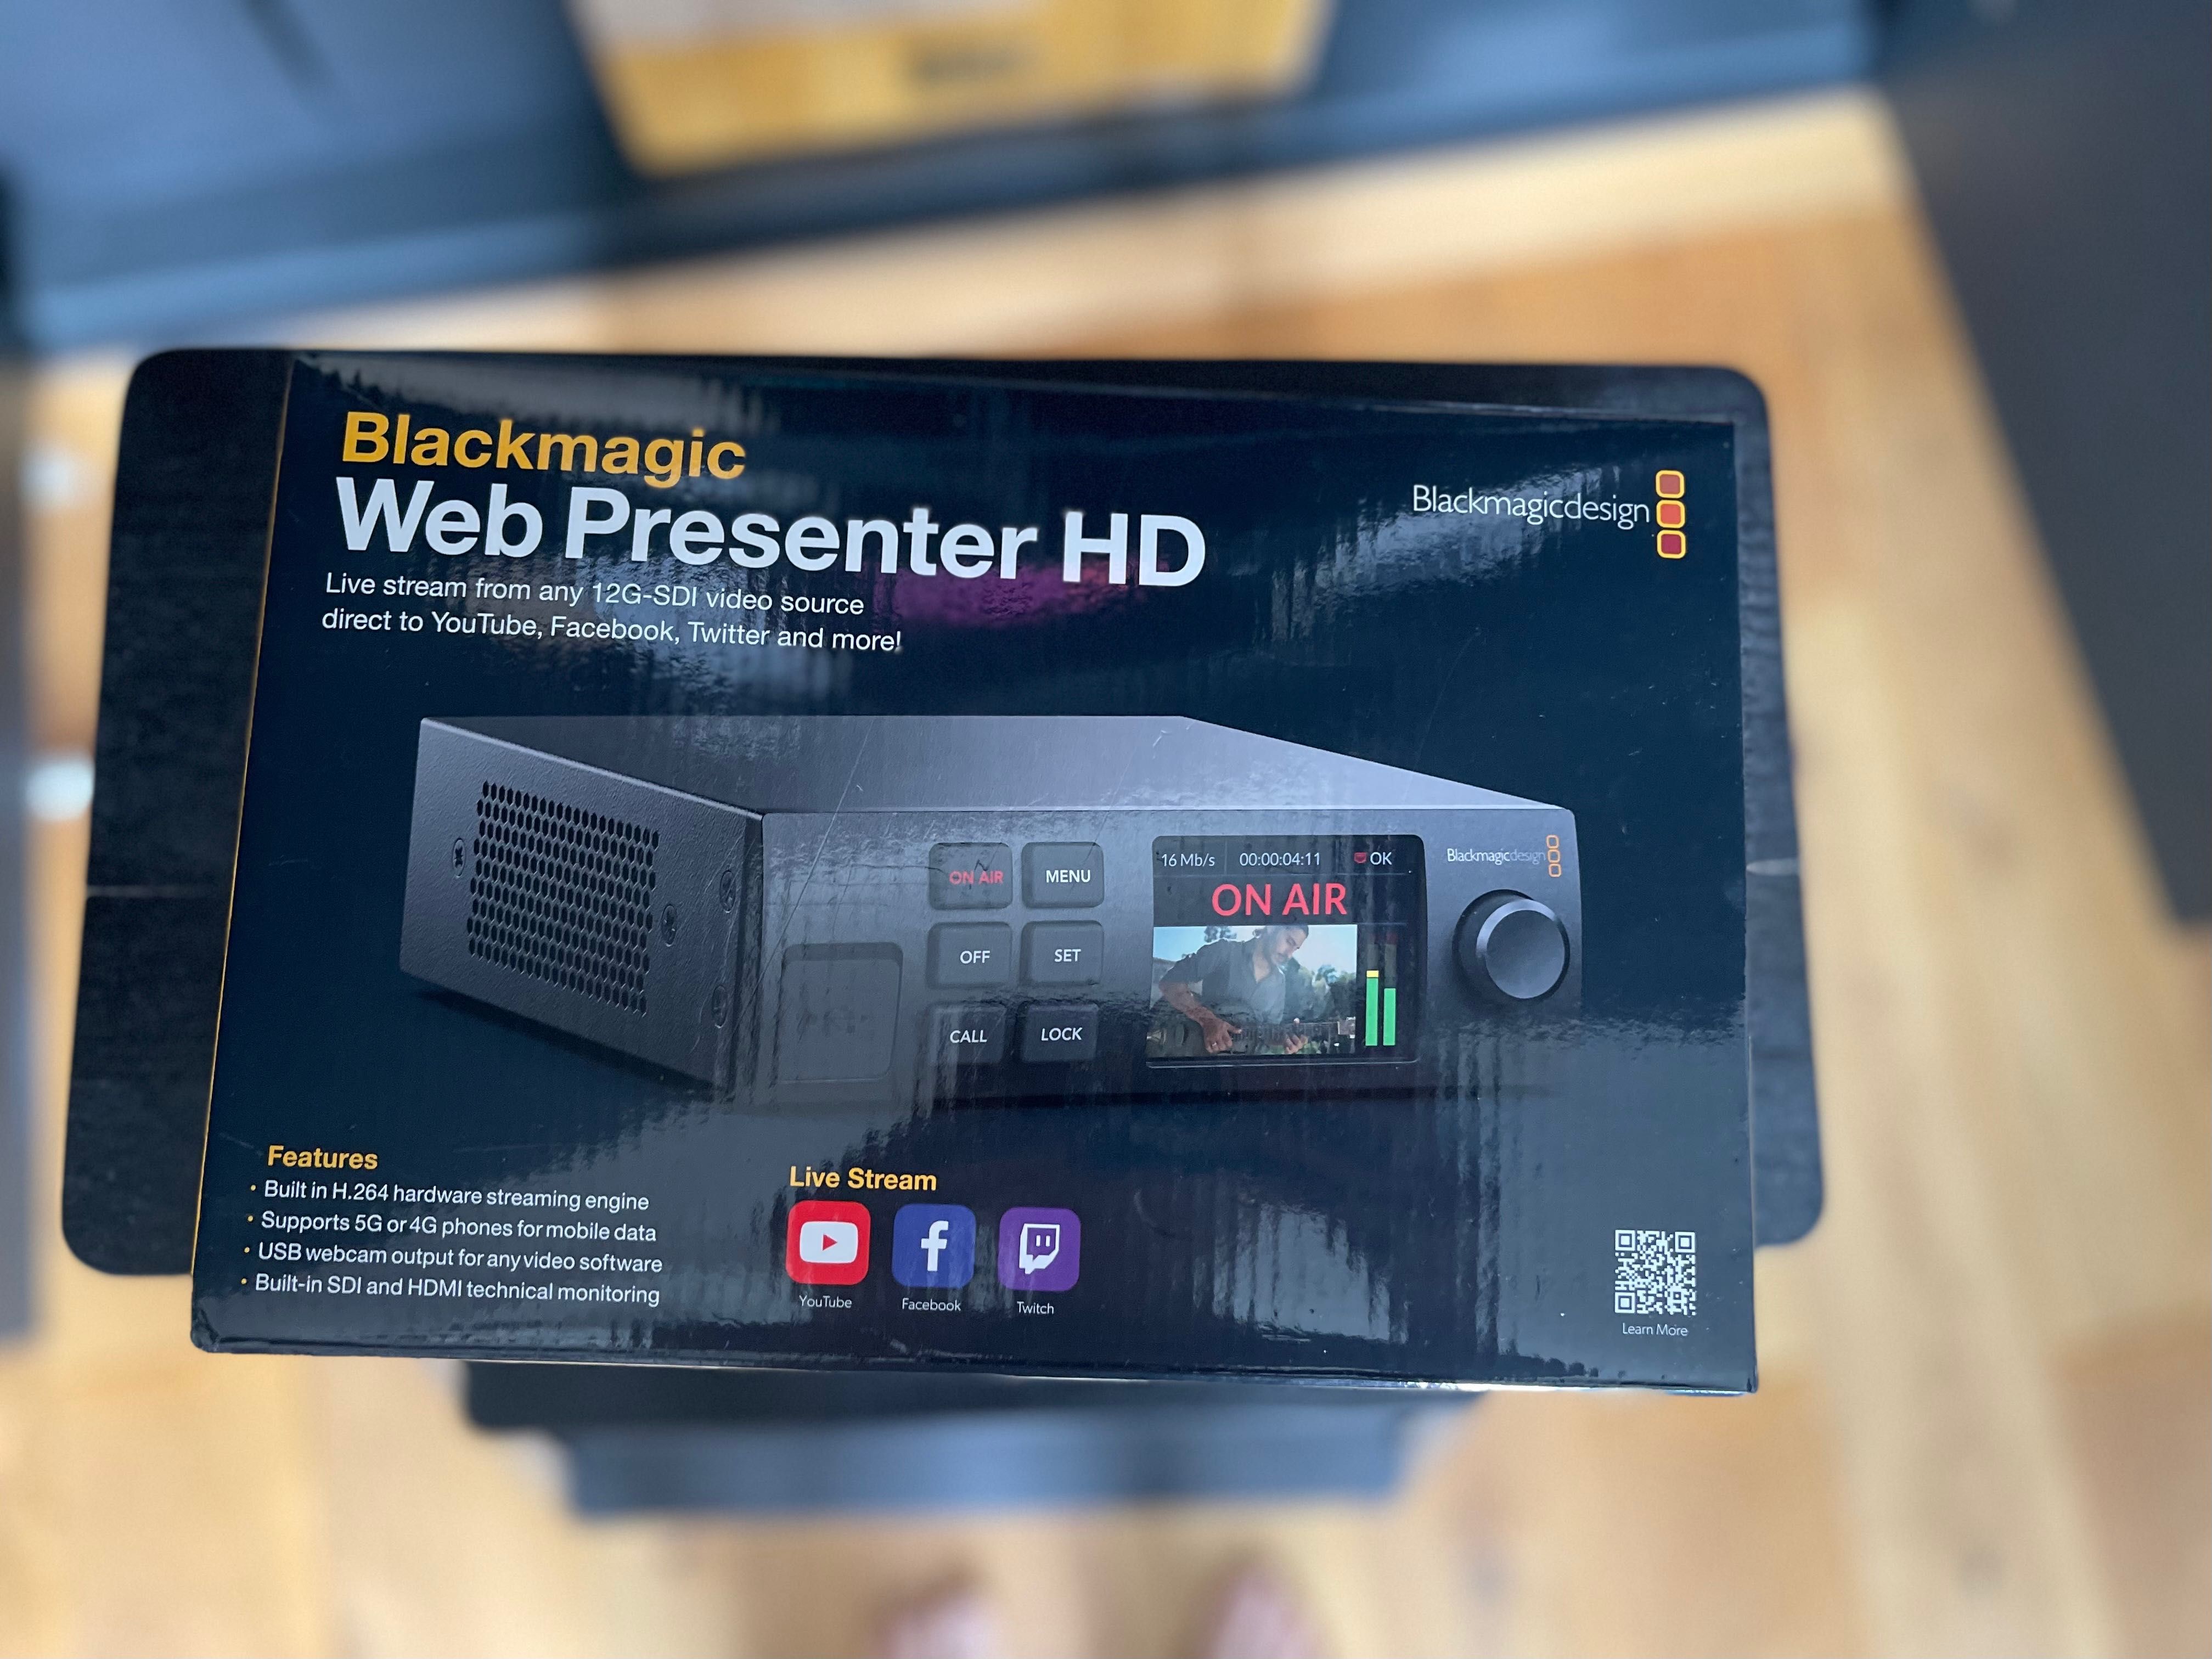 Black magic Web Presenter HD